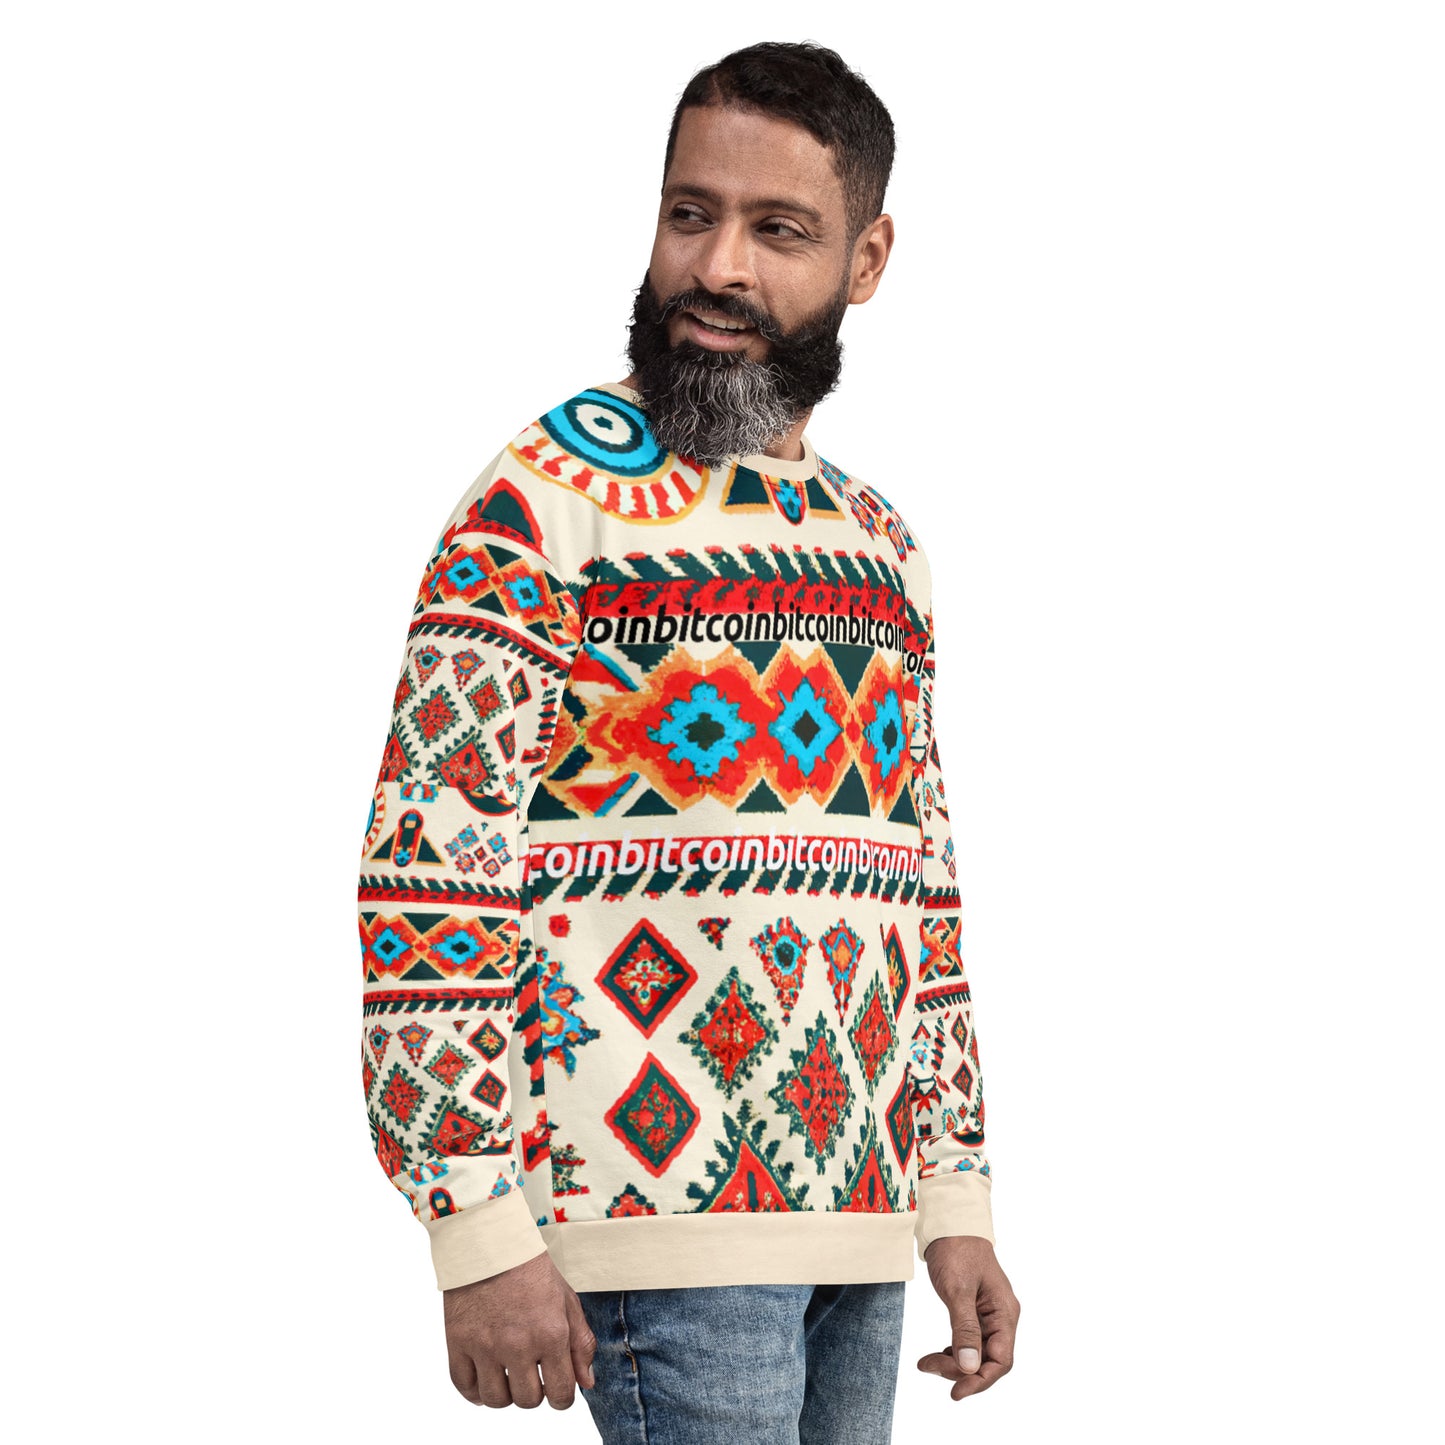 Bitcoin Native Sweatshirt